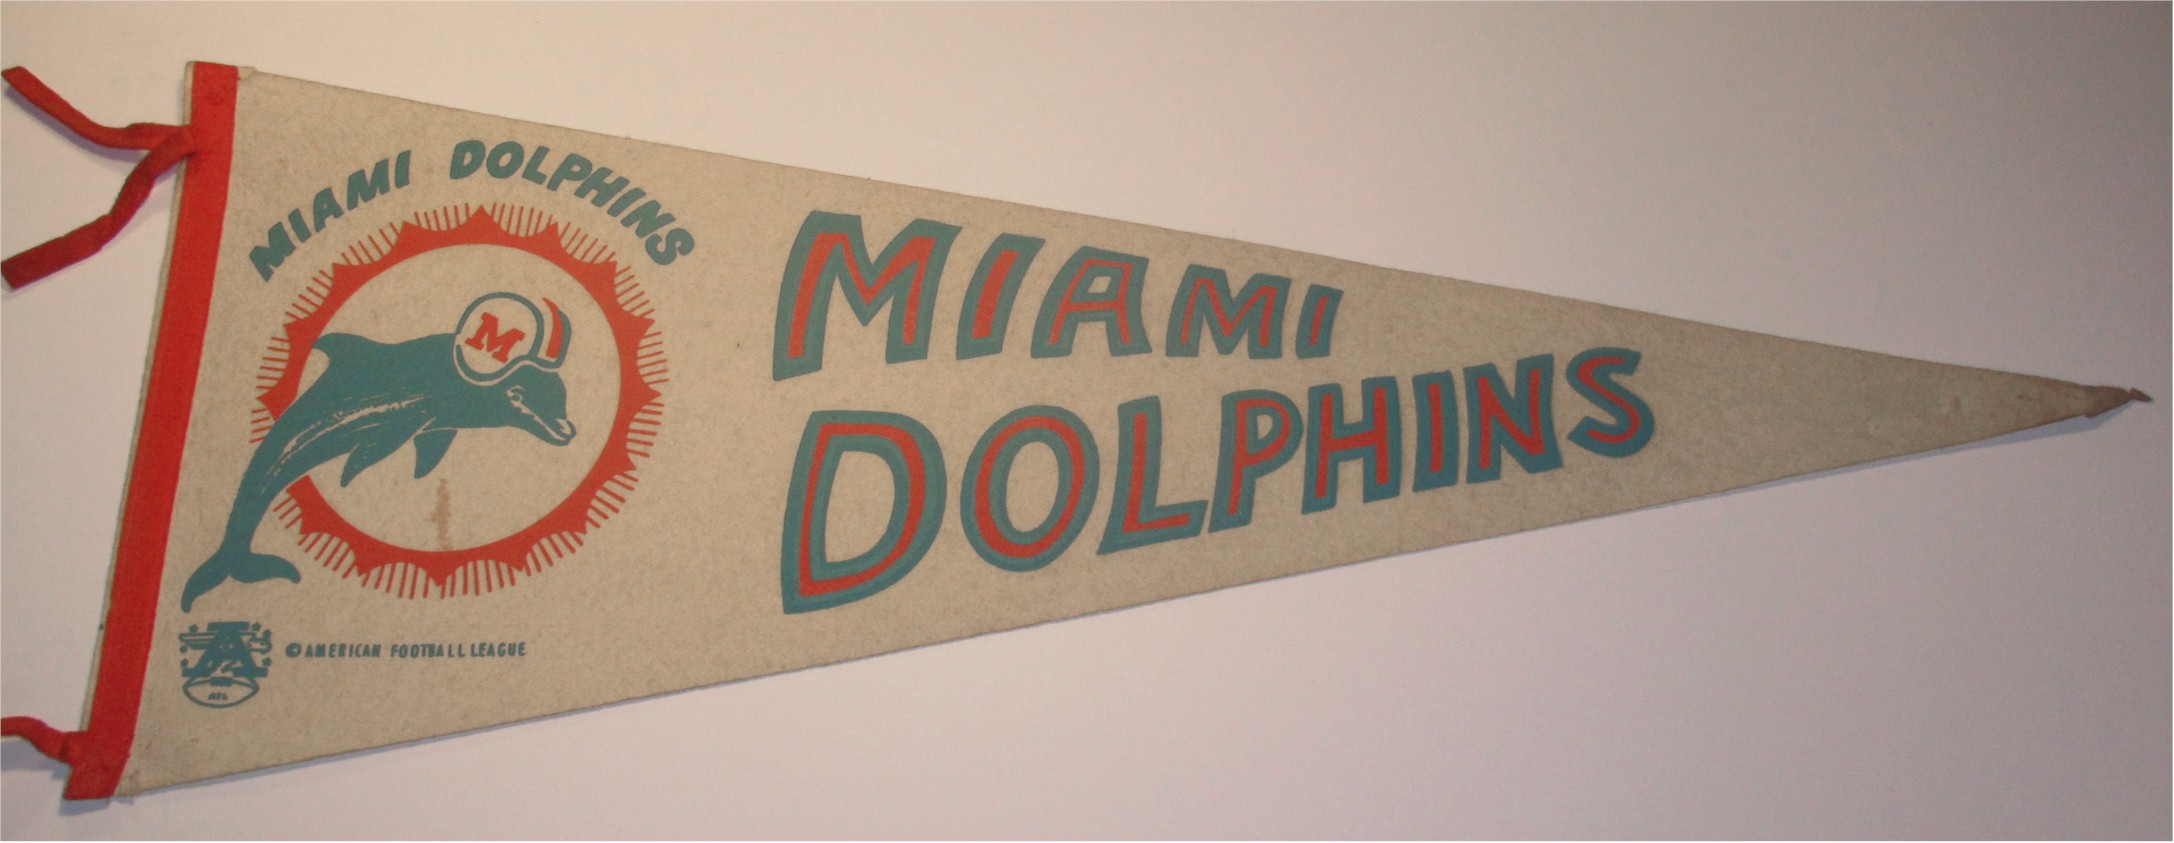 MiamiDolphins50pc.jpg